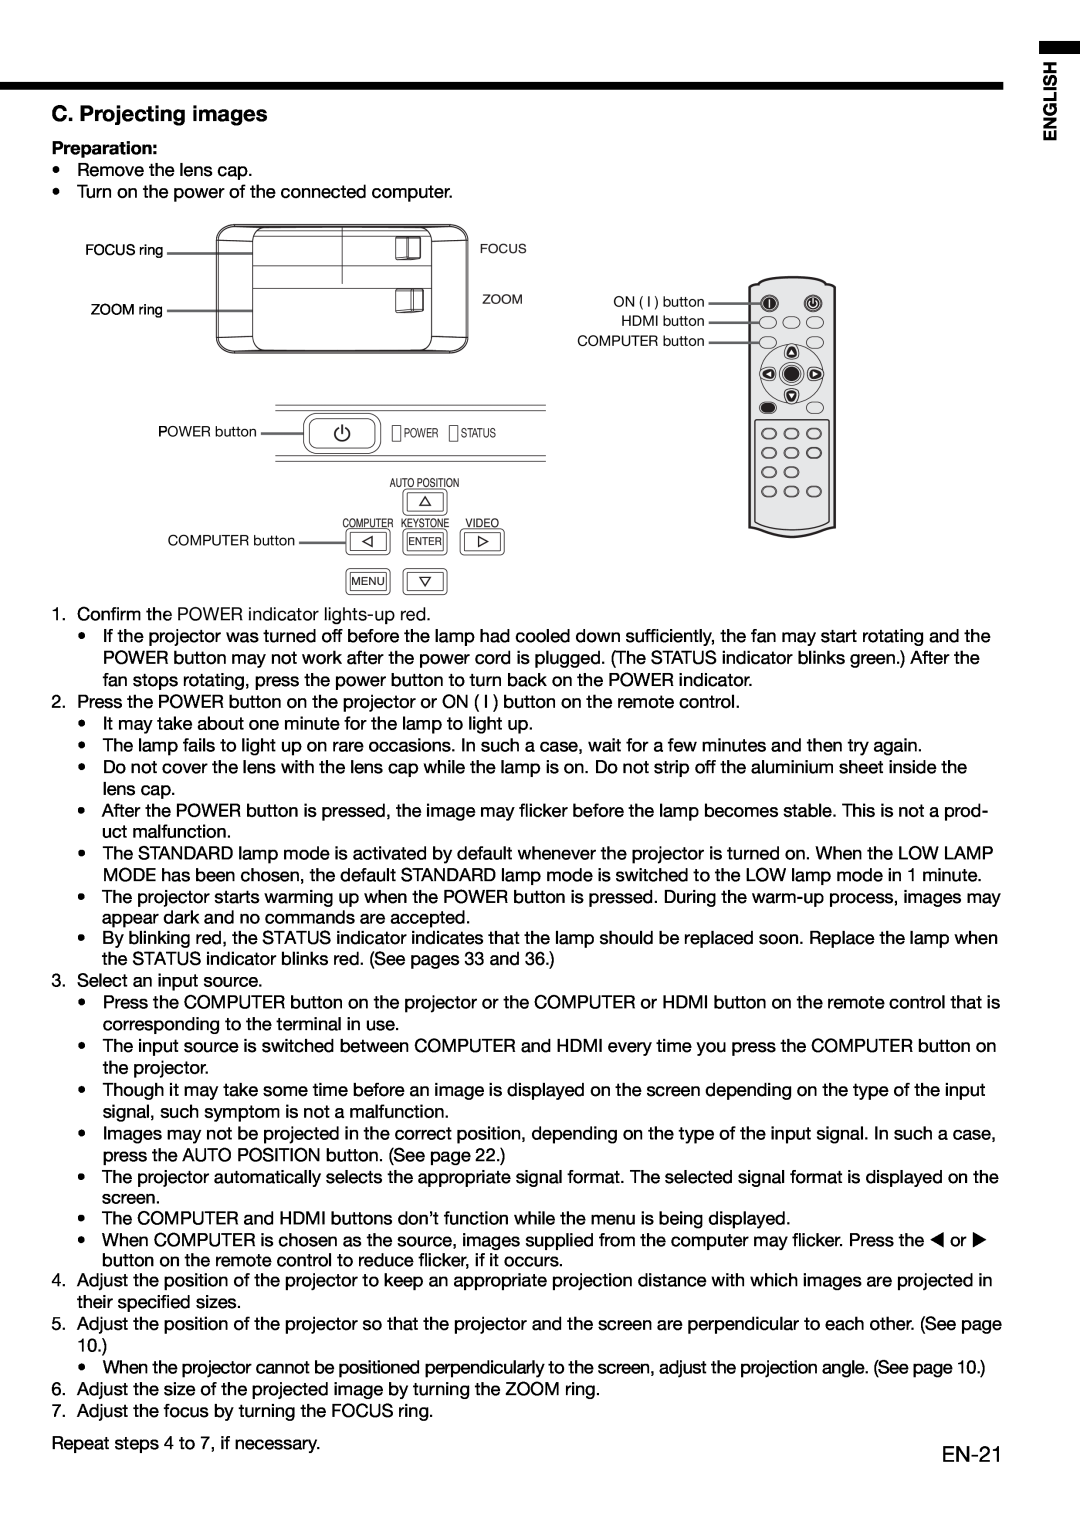 Mitsubishi HC1100 user manual C. Projecting images, EN-21, Preparation, English 